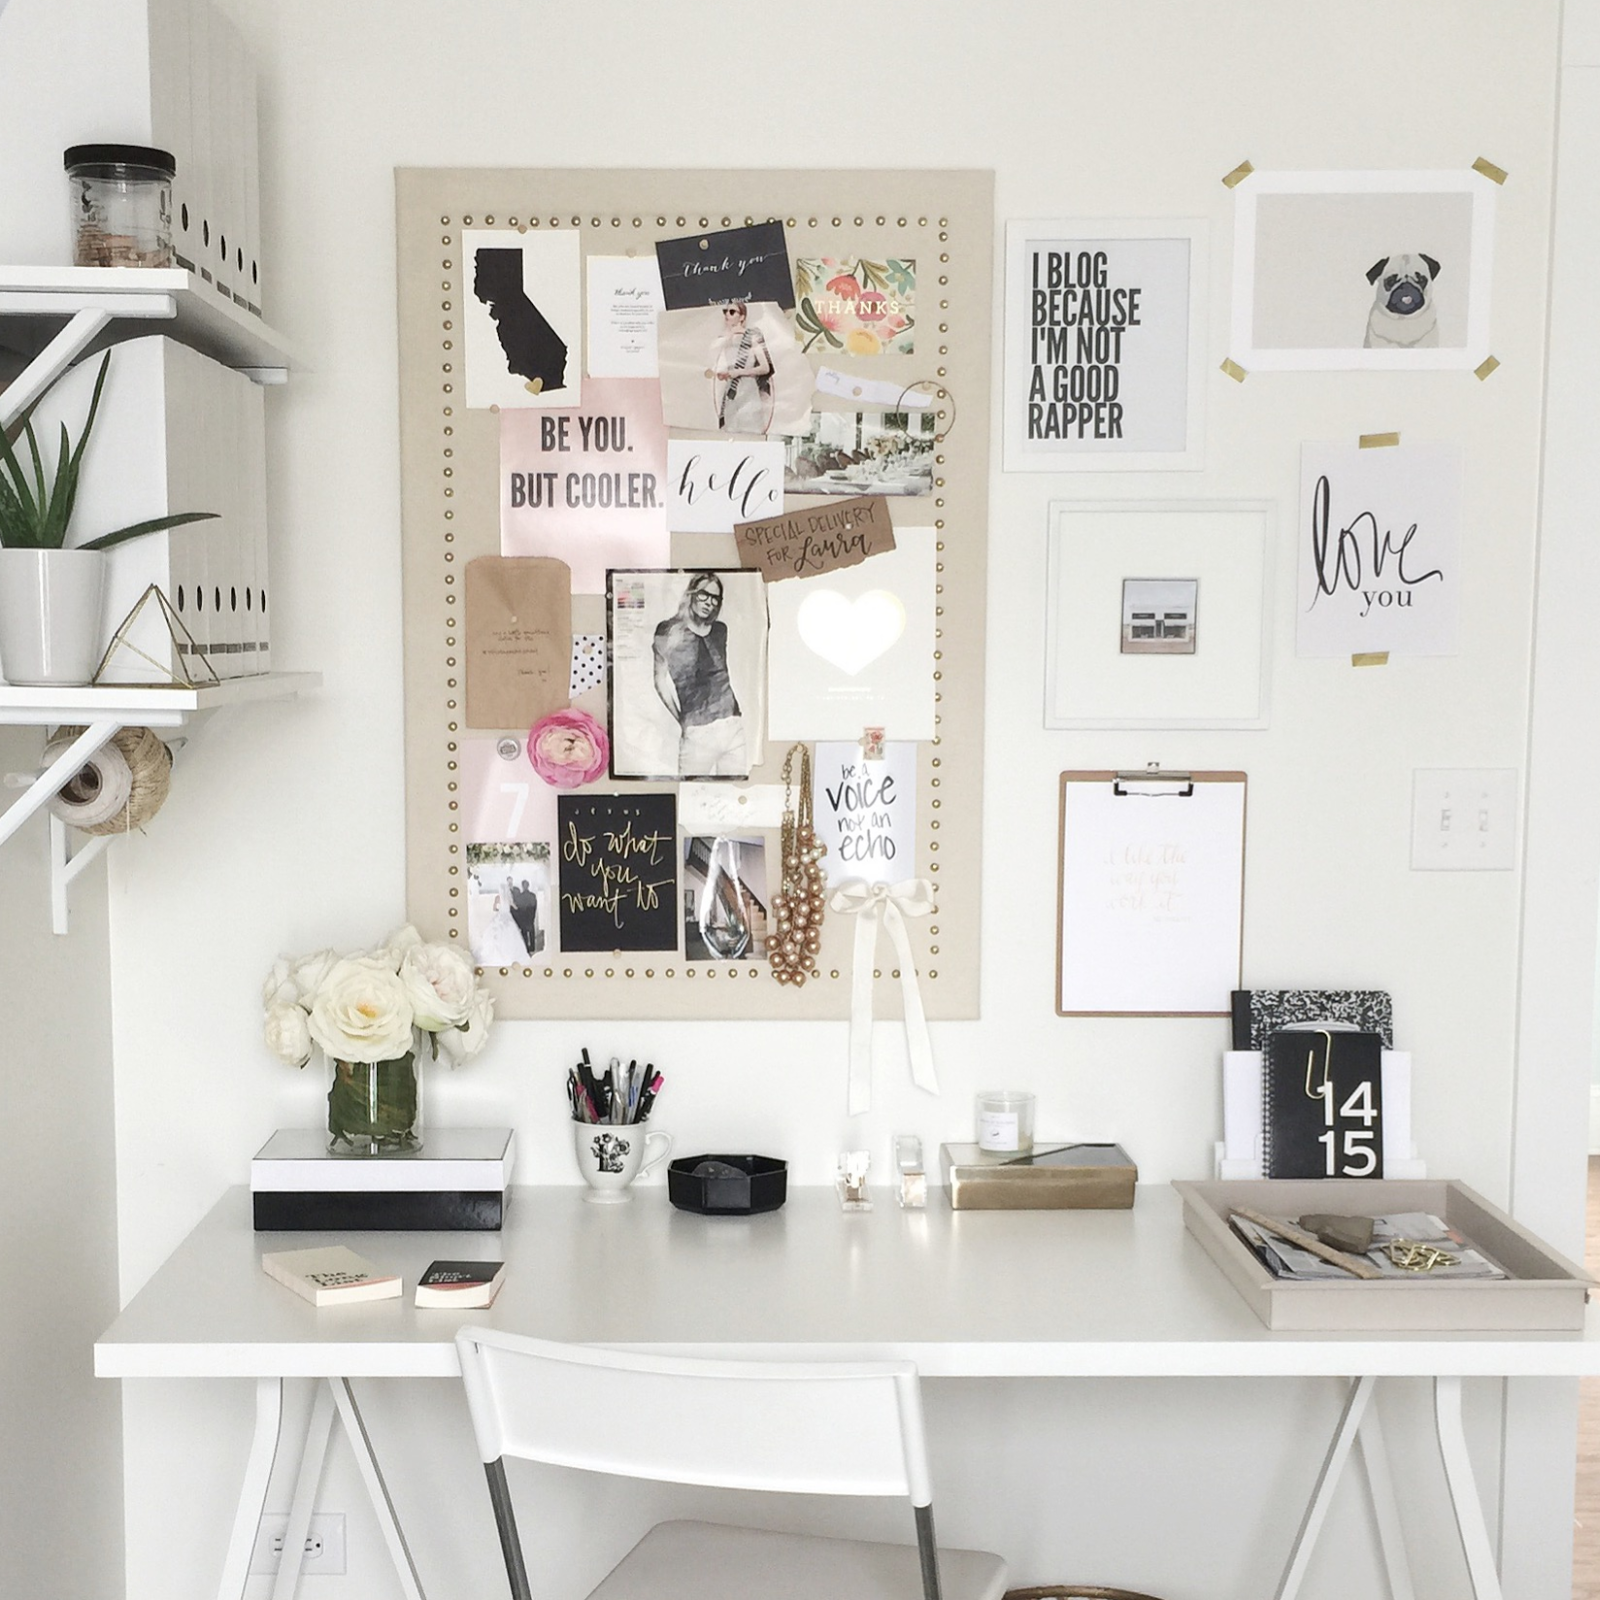 45 Best Home Office Ideas - Home Office Decor Photos